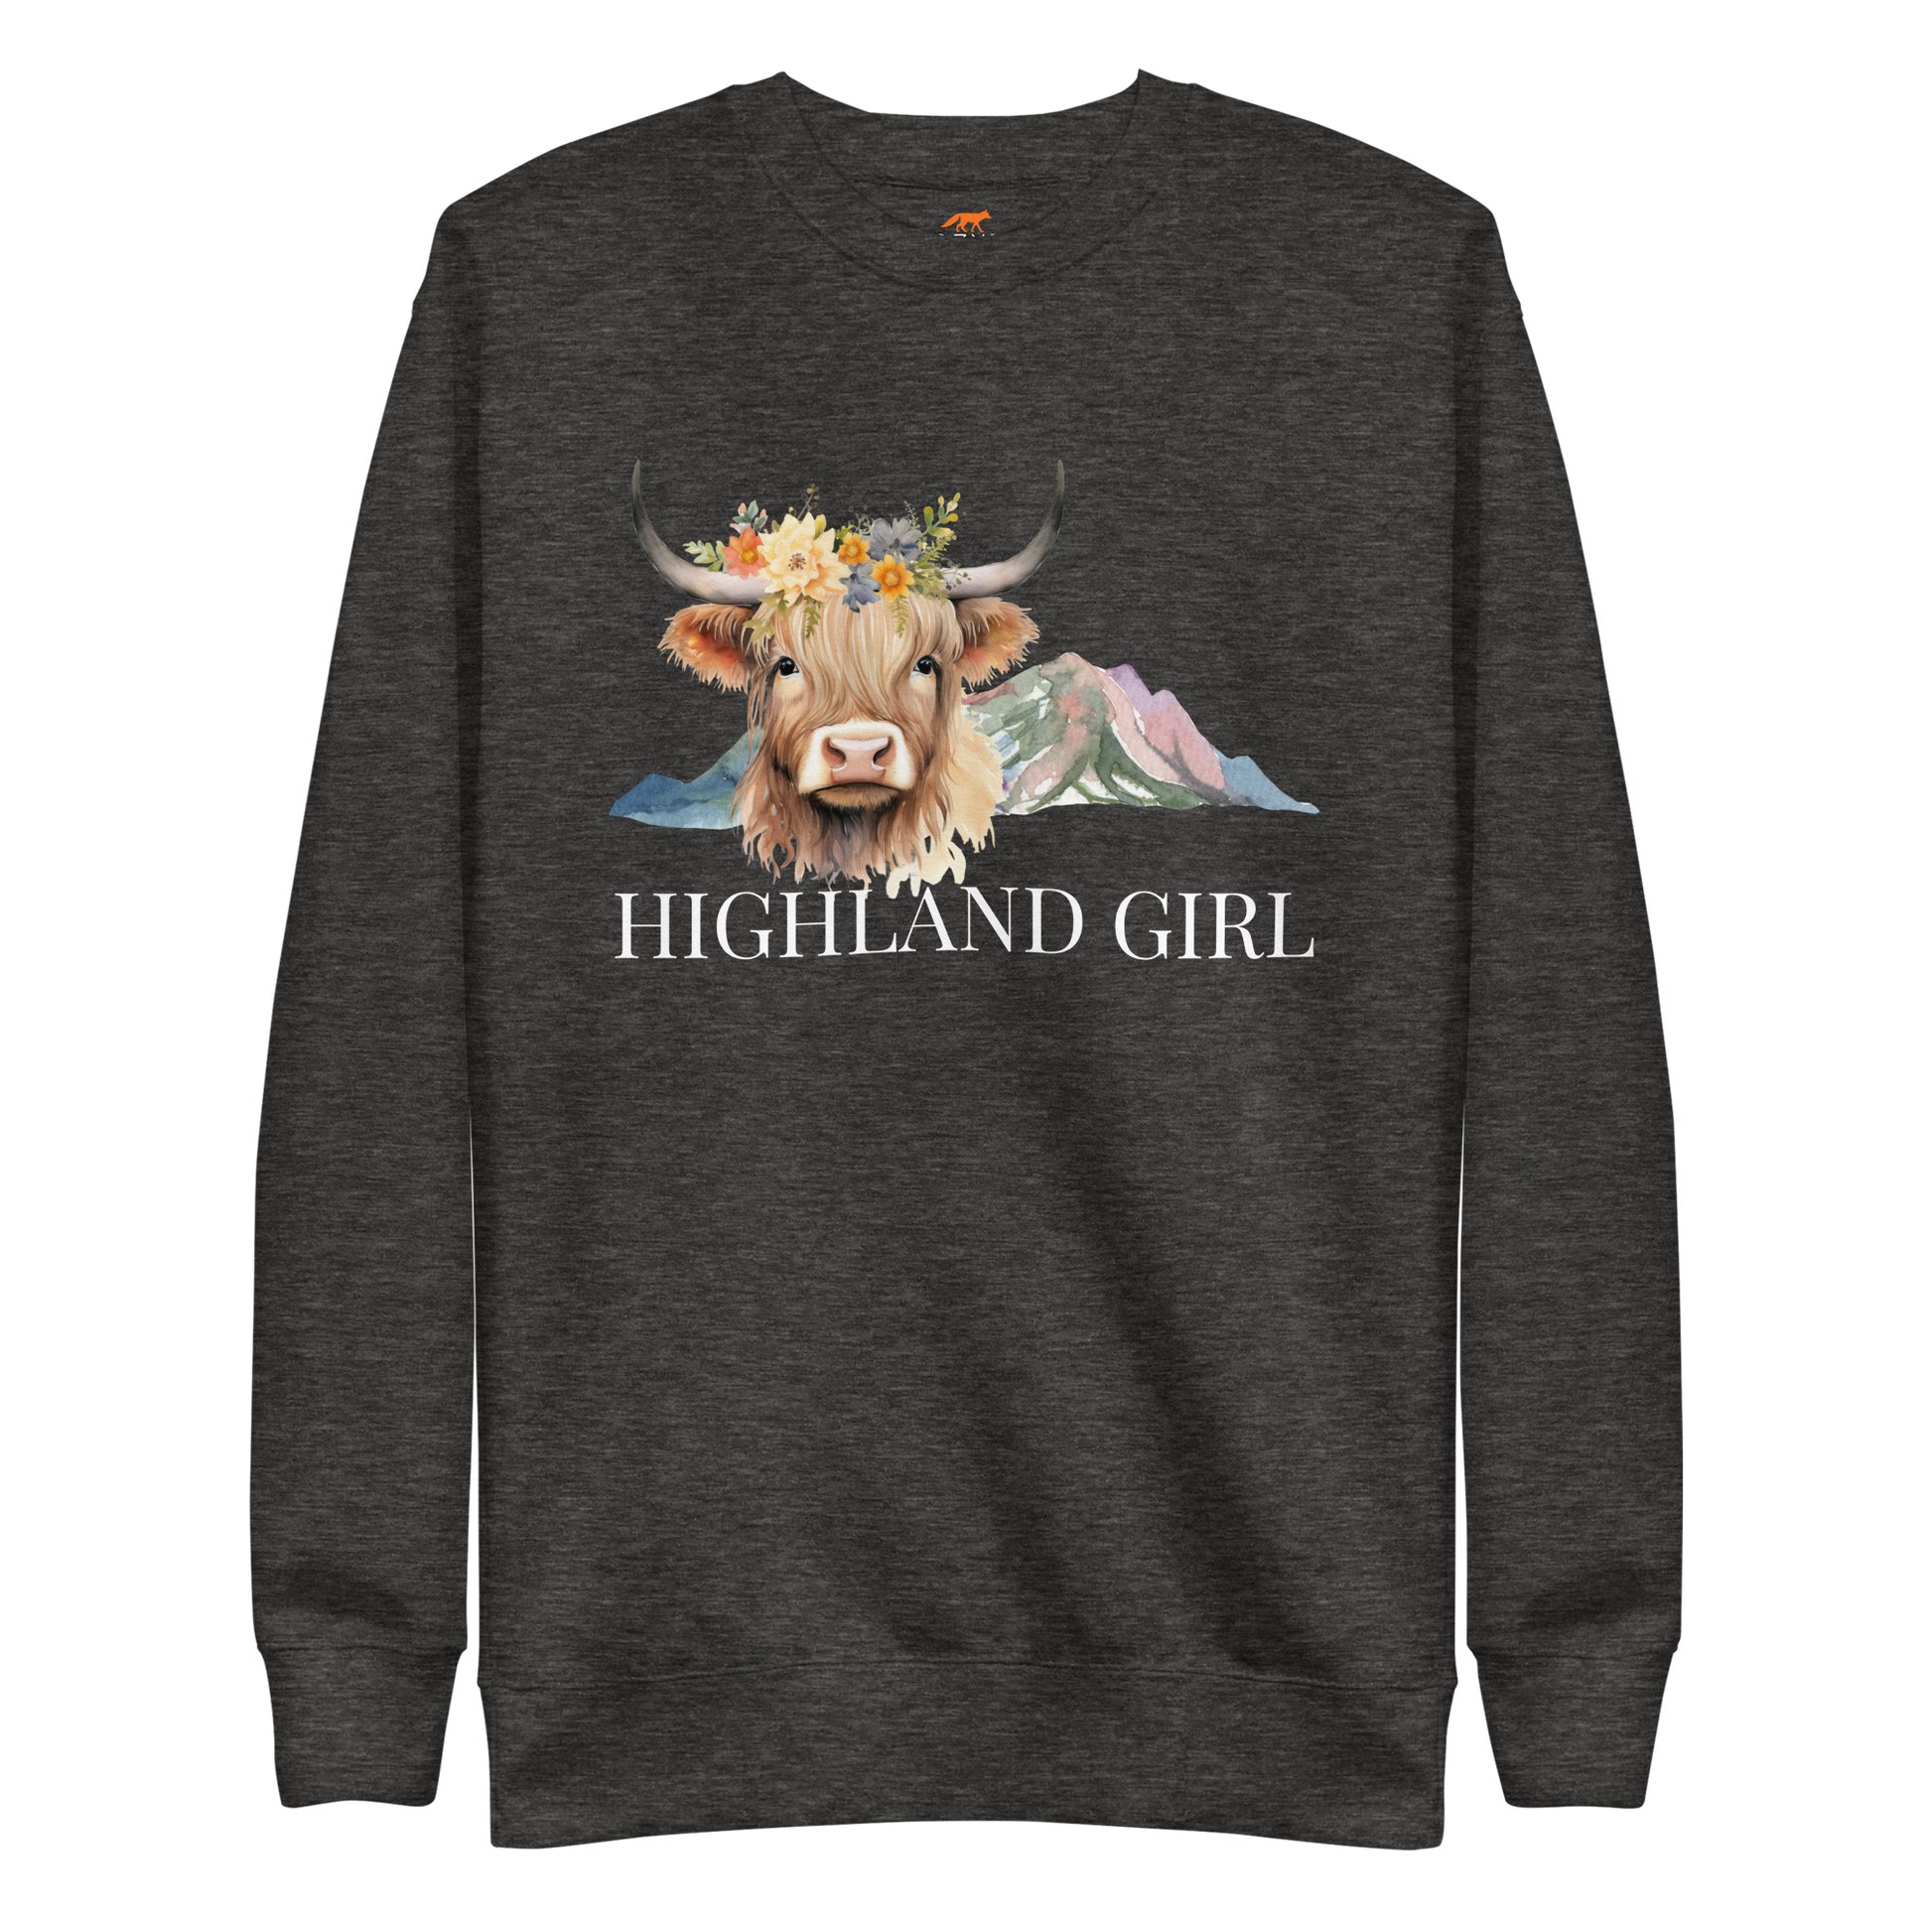 Charcoal Heather Premium Highland Cow Sweatshirt featuring an adorable Highland Girl graphic on the chest - Cute Graphic Highland Cow Sweatshirts - Boozy Fox